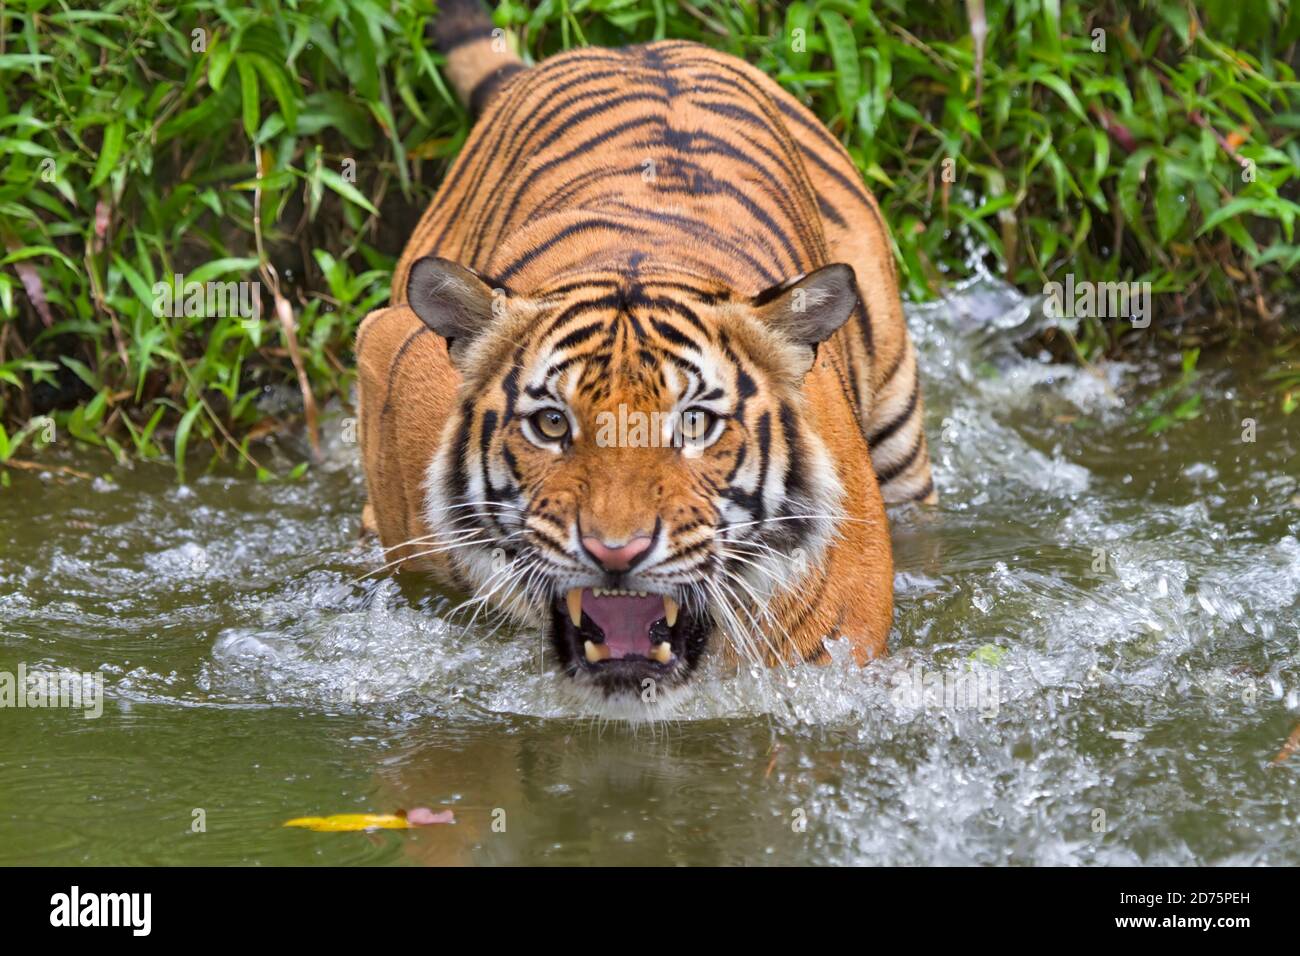 Sumatran tiger (Panthera tigris sumatrae). Sumatran tigers are a distinct subspecies of tiger found only on the Indonesian island of Sumatra. They are Stock Photo